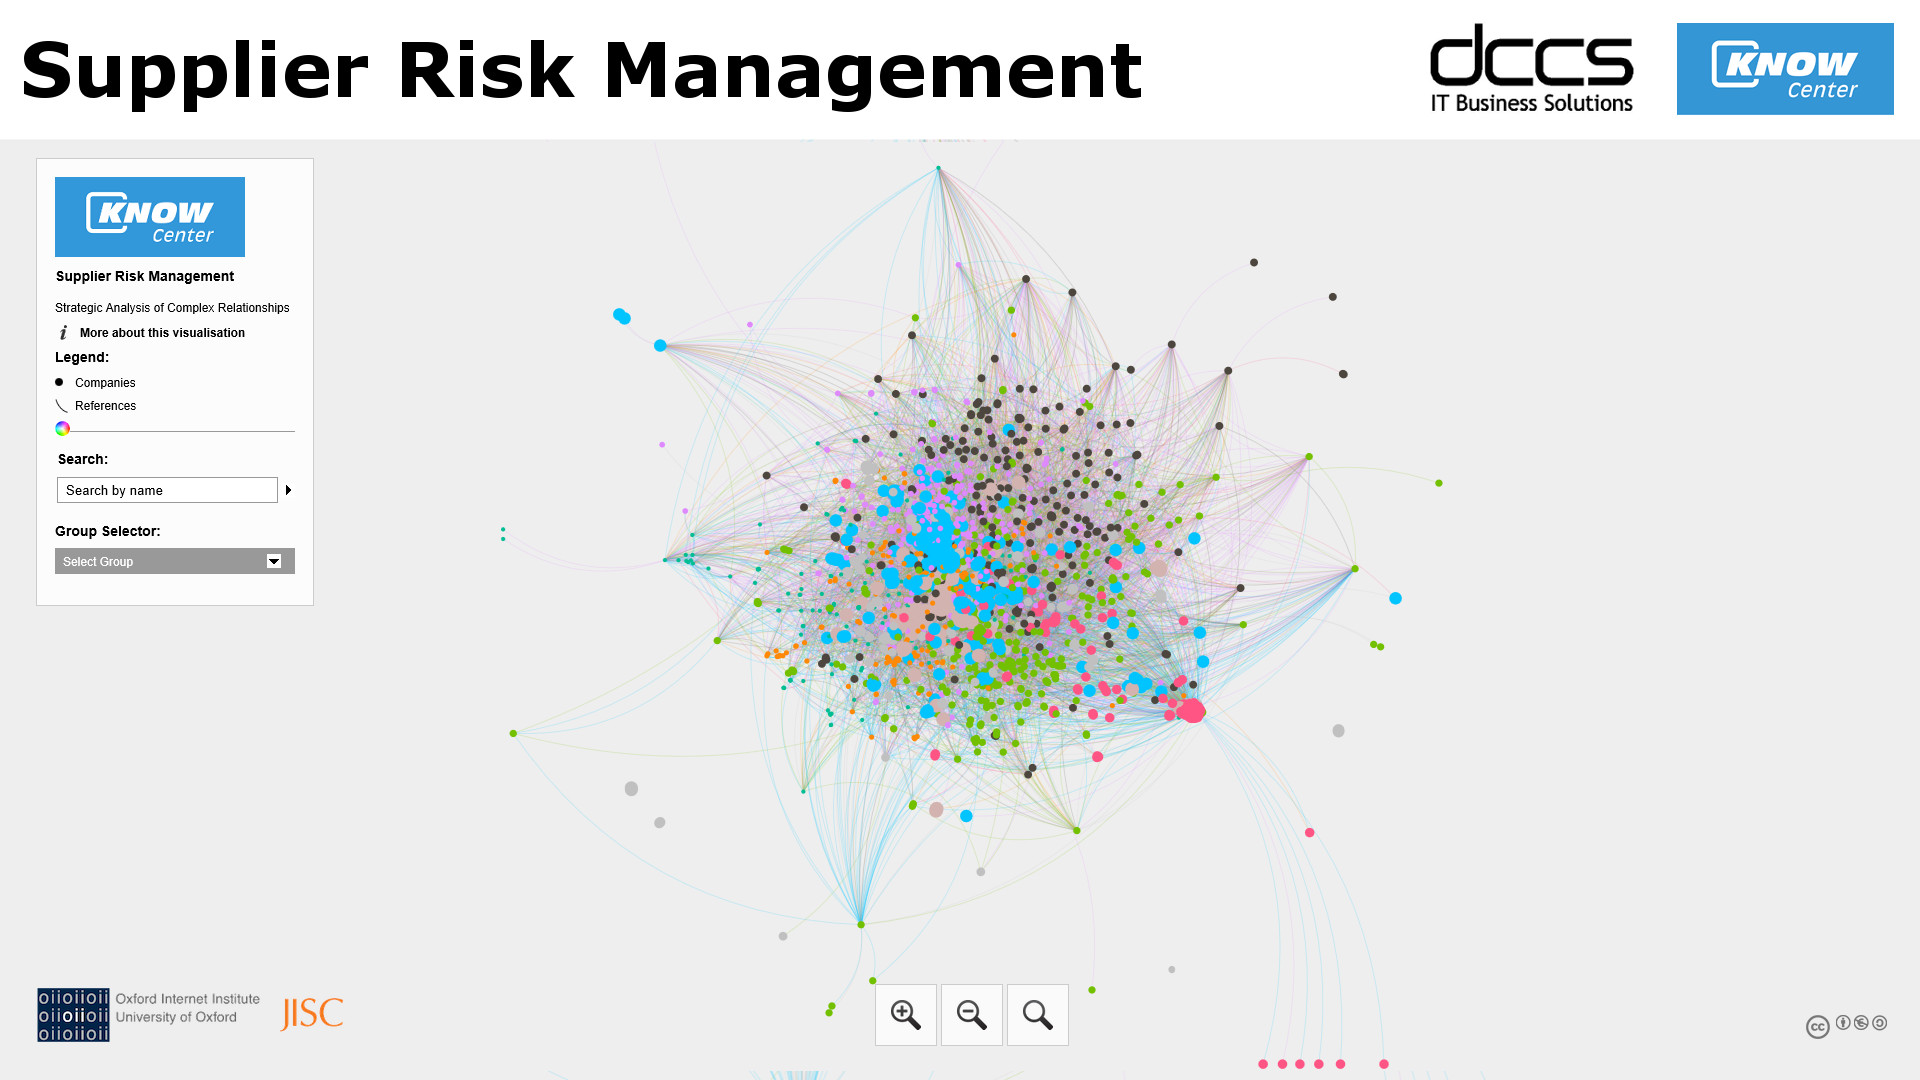 Supplier Risk Management - Strategic Analysis of Complex Relationships